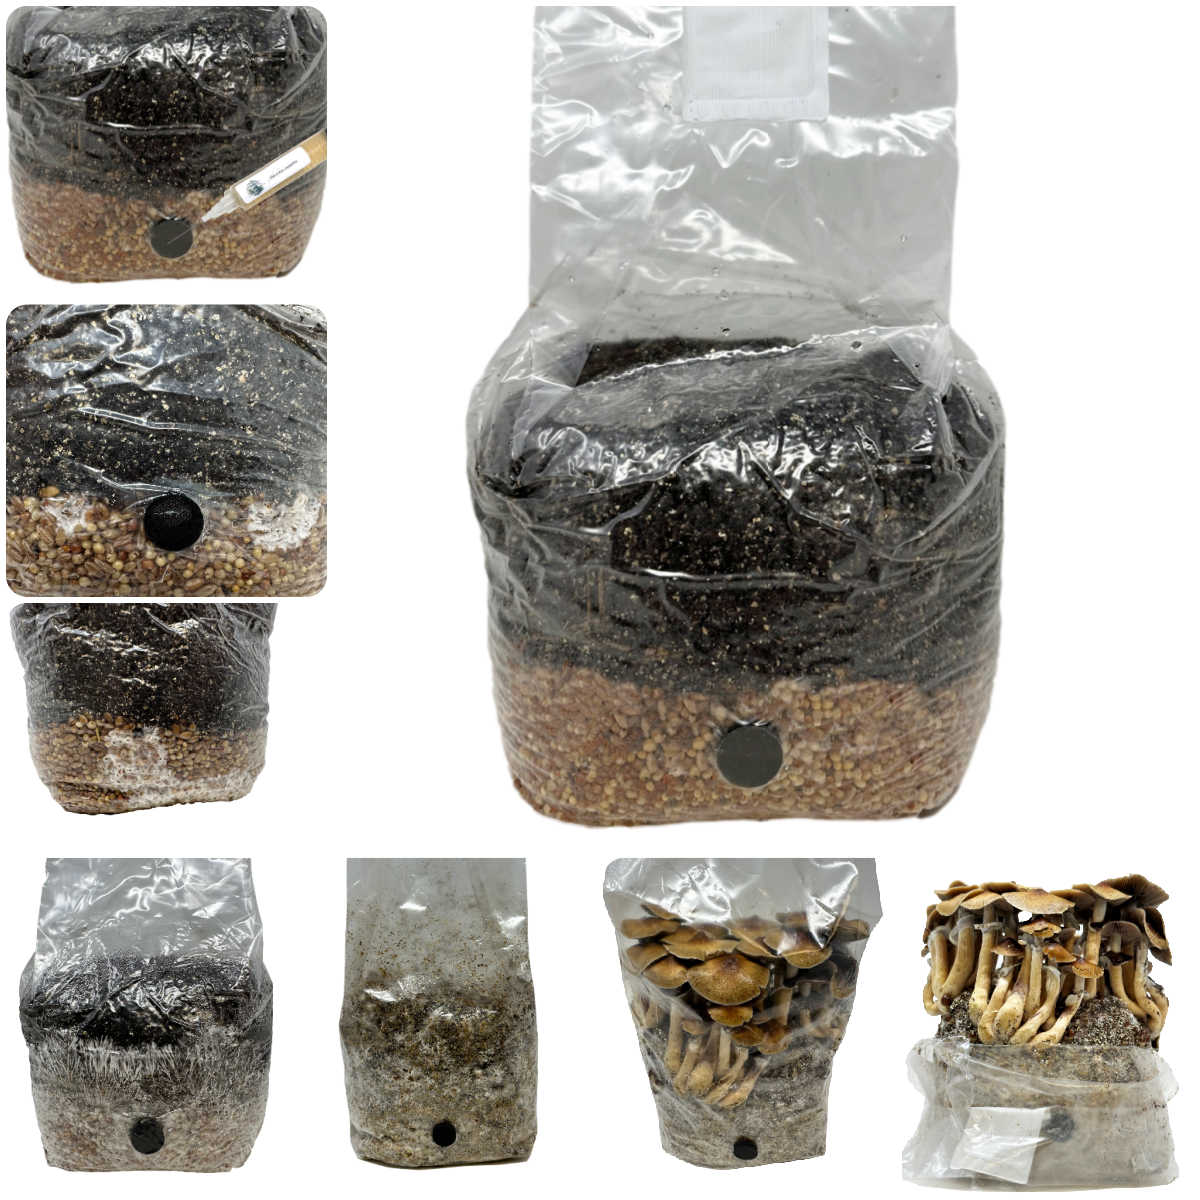 Amazon.com: Foraging Bag - Foraging kit with Bag and Knife, Mushroom Bag -  Morel Mushroom Bag, Foraging Kit - Mushroom Hunting Bag and Mushroom Knife,  Best Mushroom Foraging Kit, Great for Mushroom